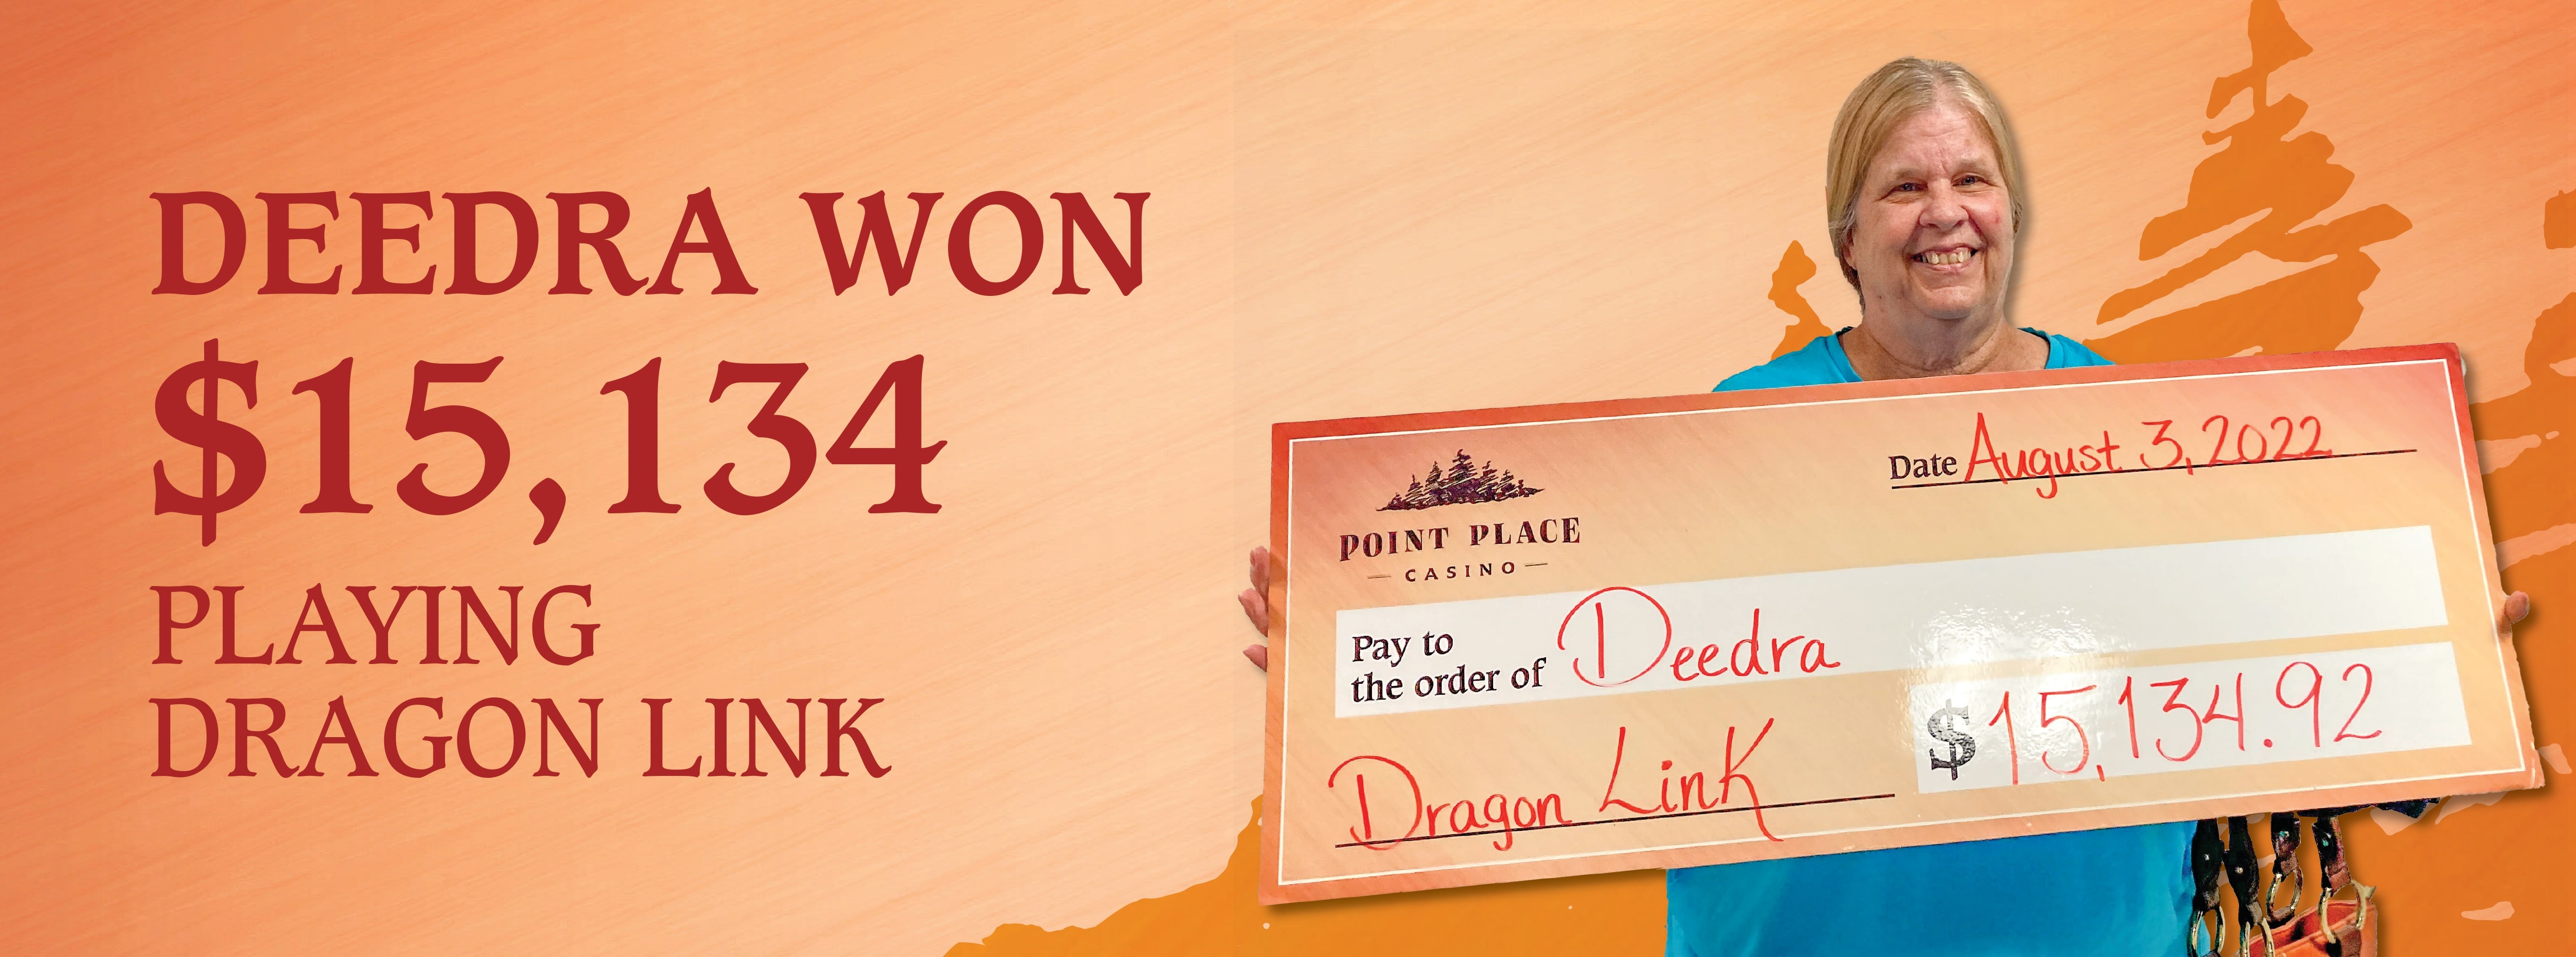 Deedra won $15,134 playing dragon link